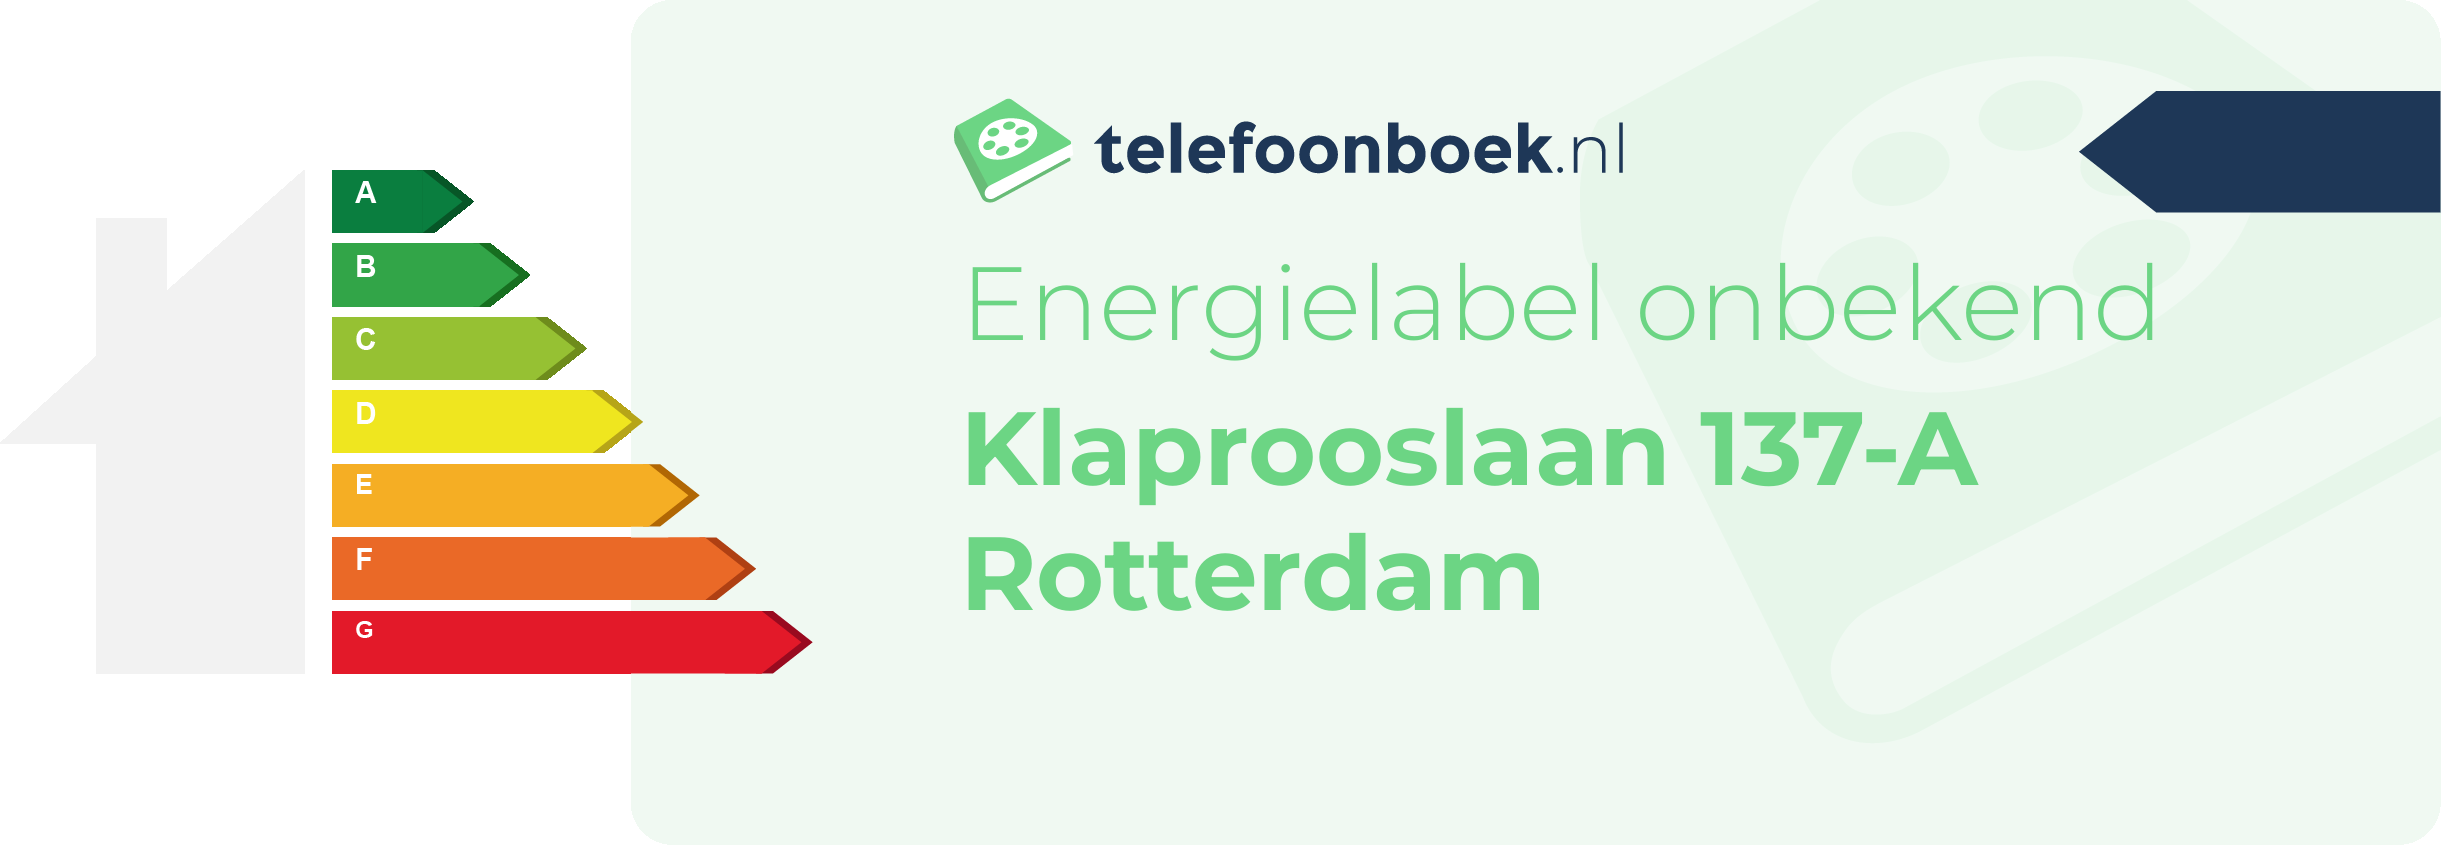 Energielabel Klaprooslaan 137-A Rotterdam